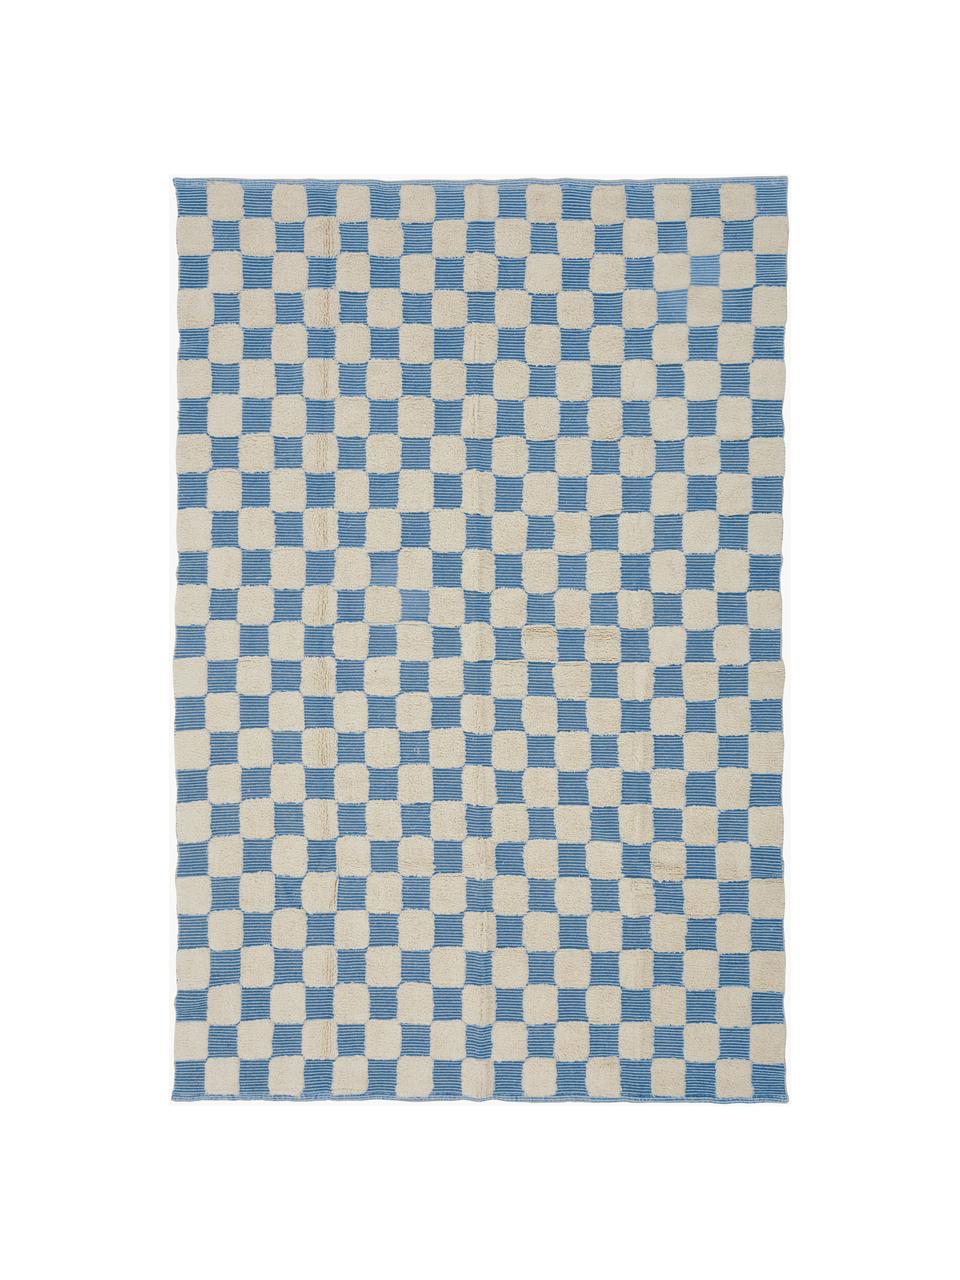 Alfombra artesanal texturizada Penton, 100% algodón, Blanco crema, azul, An 170 x L 240 cm (Tamaño M)